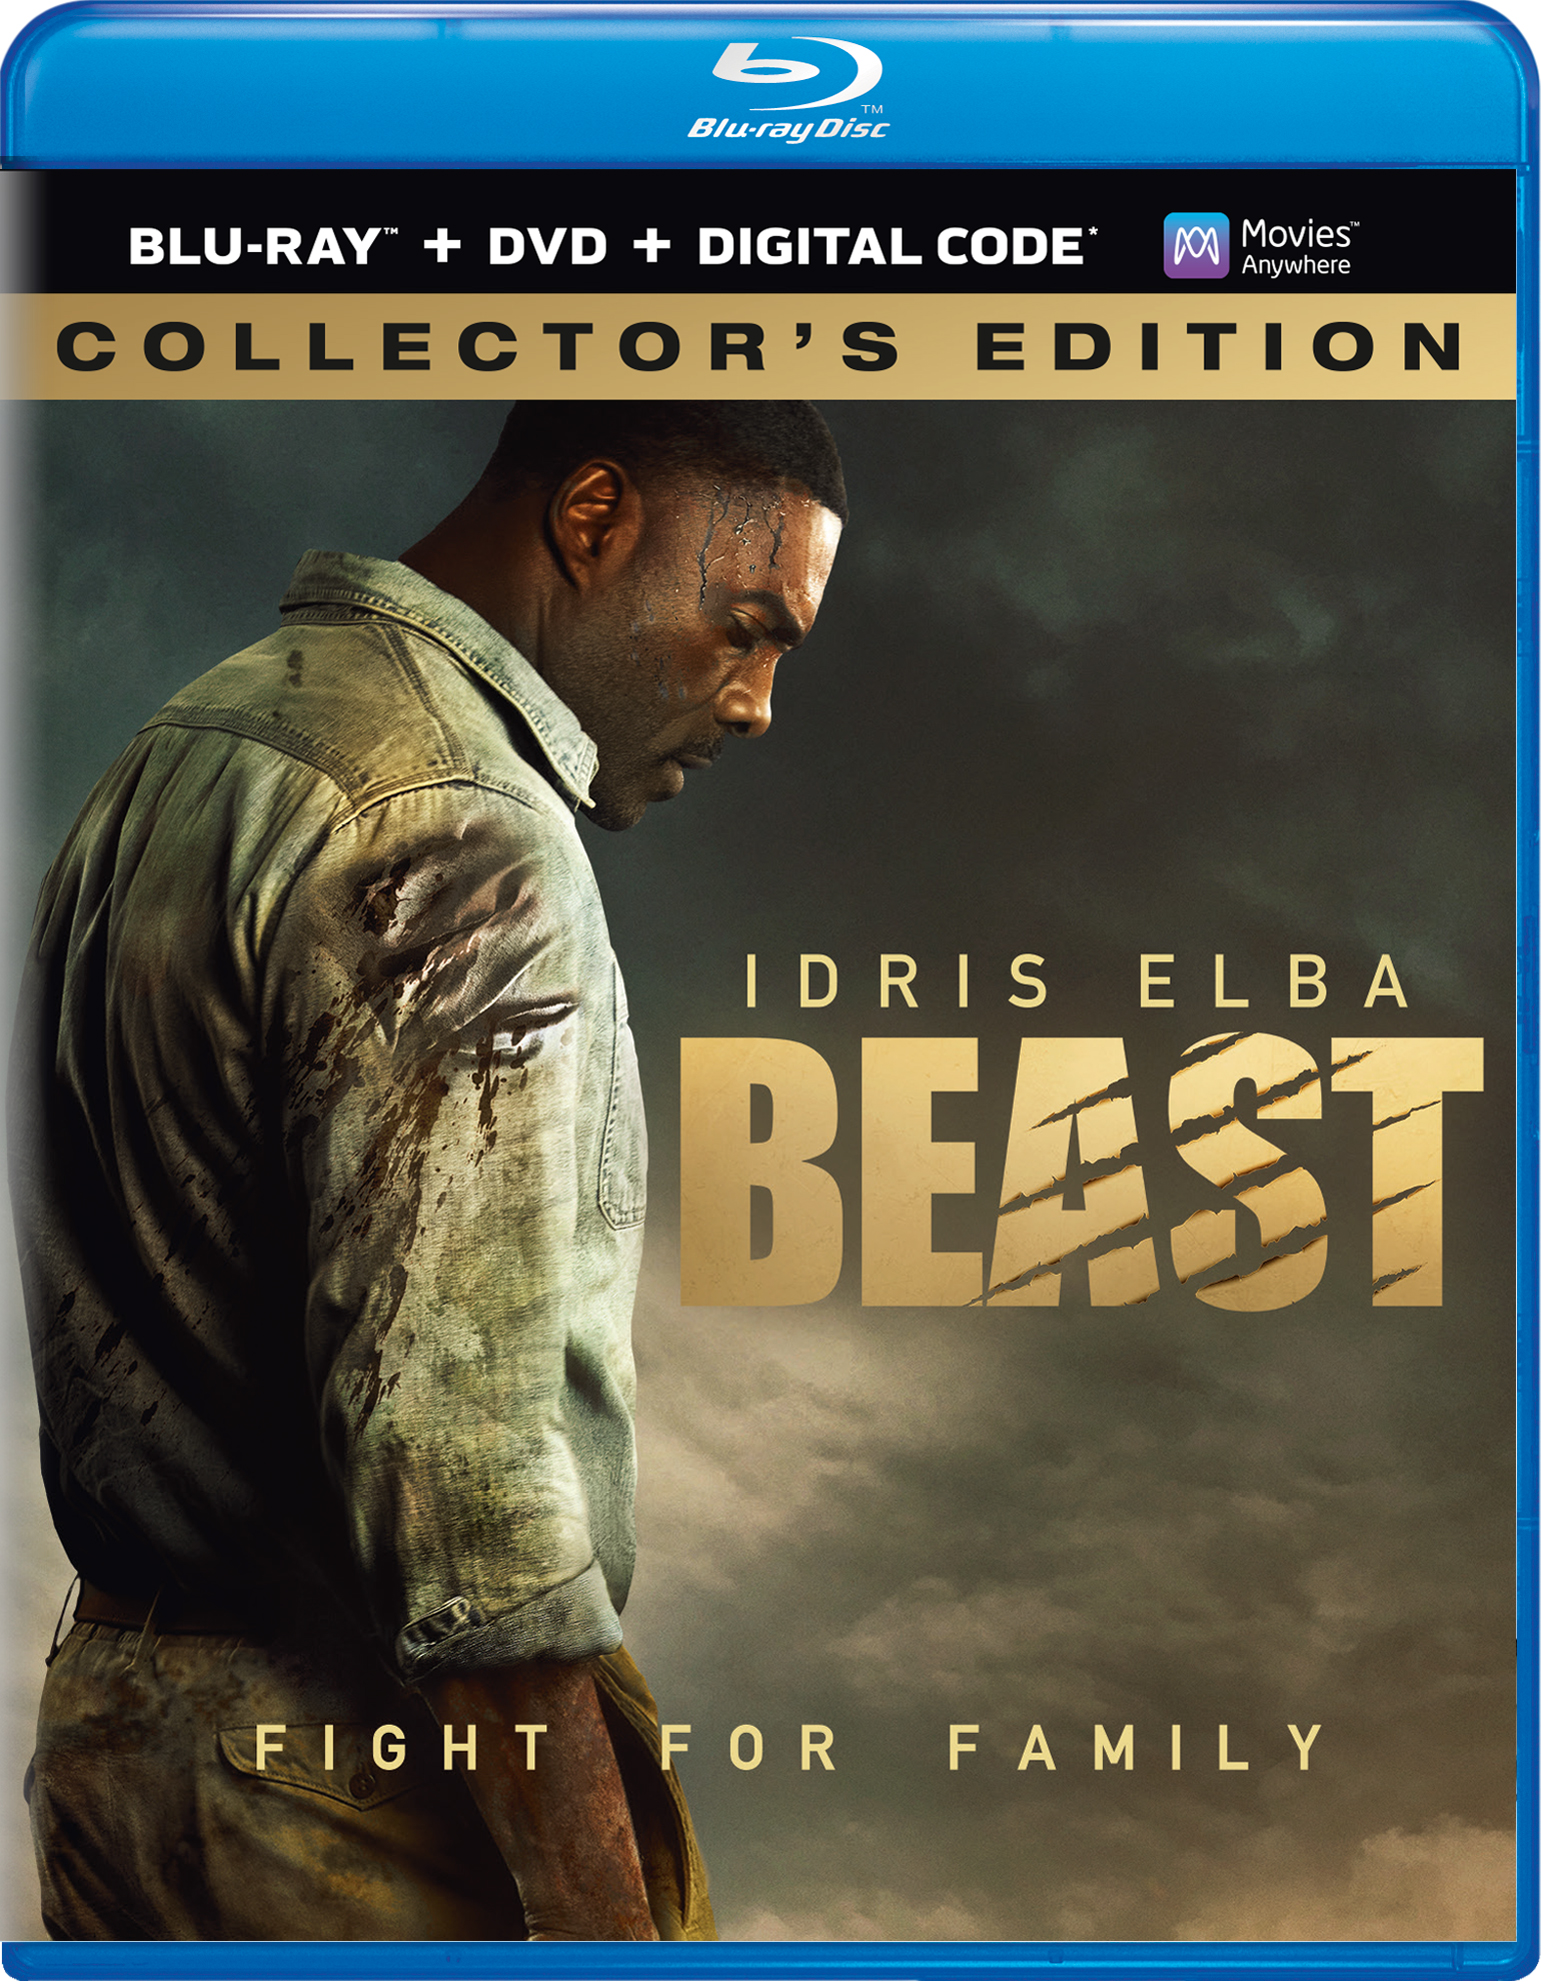 Werewolf - The Beast Among Us (Blu-ray + DVD + New Blu